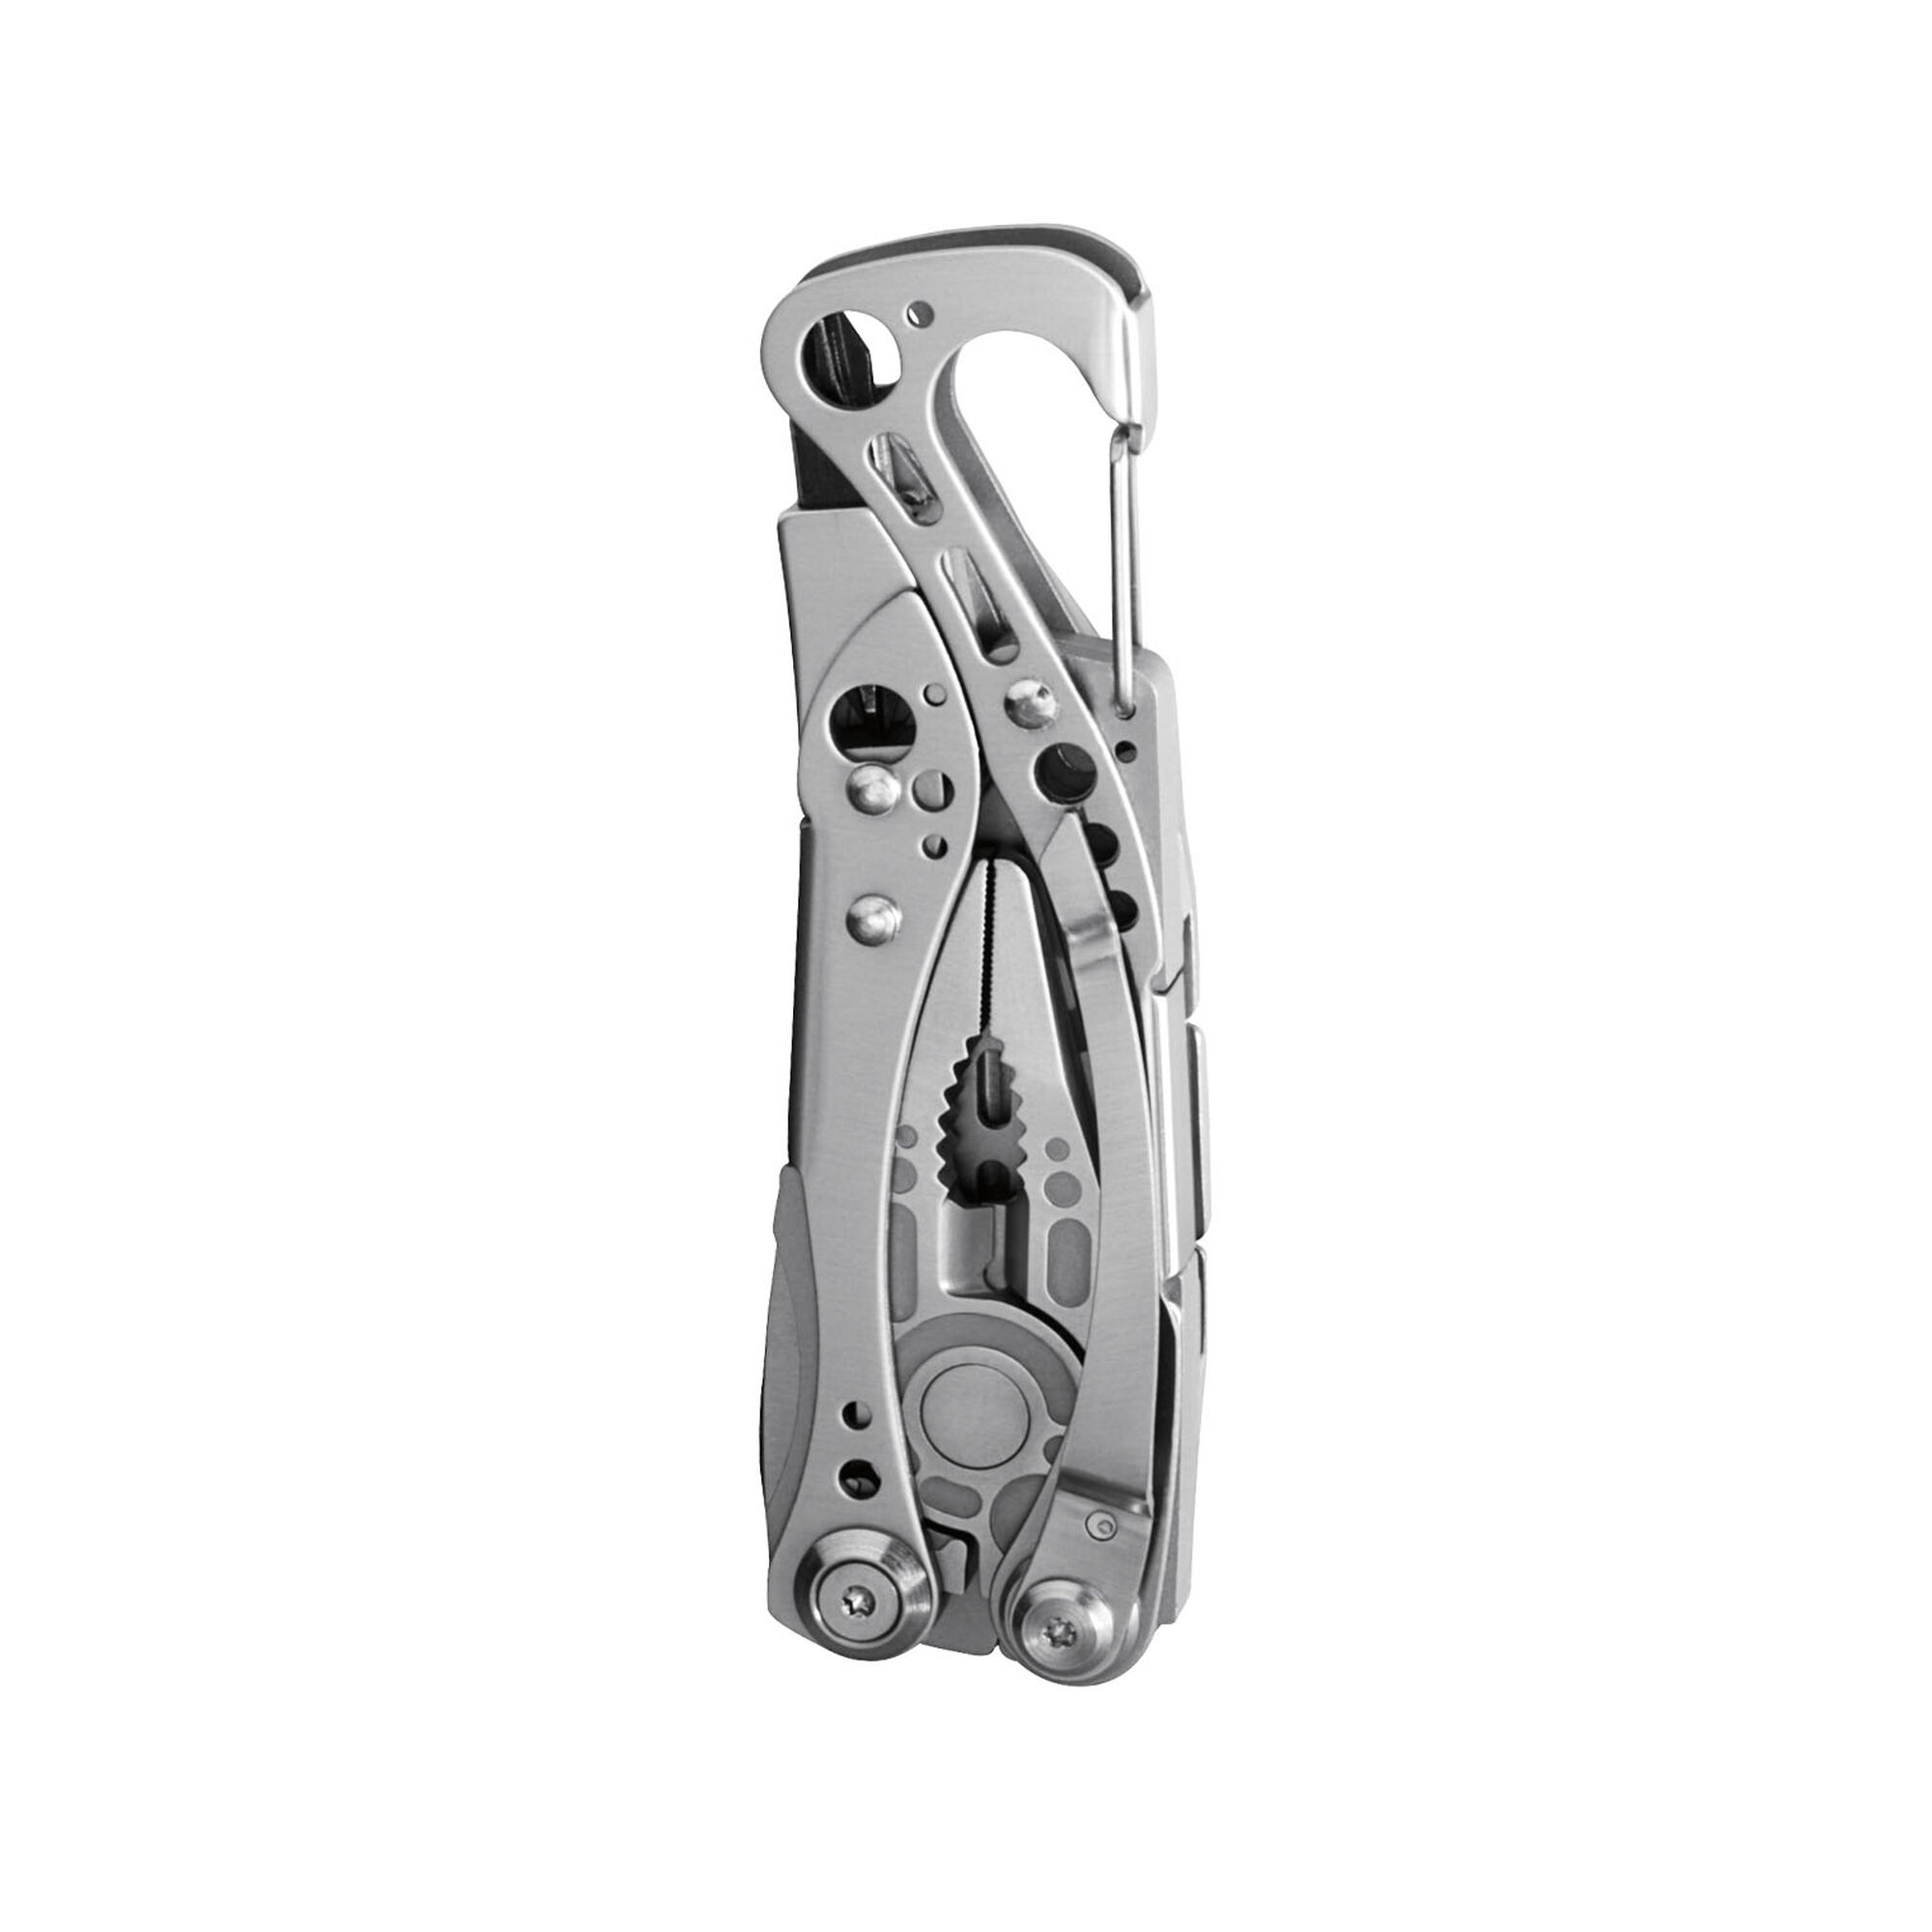 Leatherman Skeletool Pocket-Size Multi-Tool - KnifeCenter - 830845